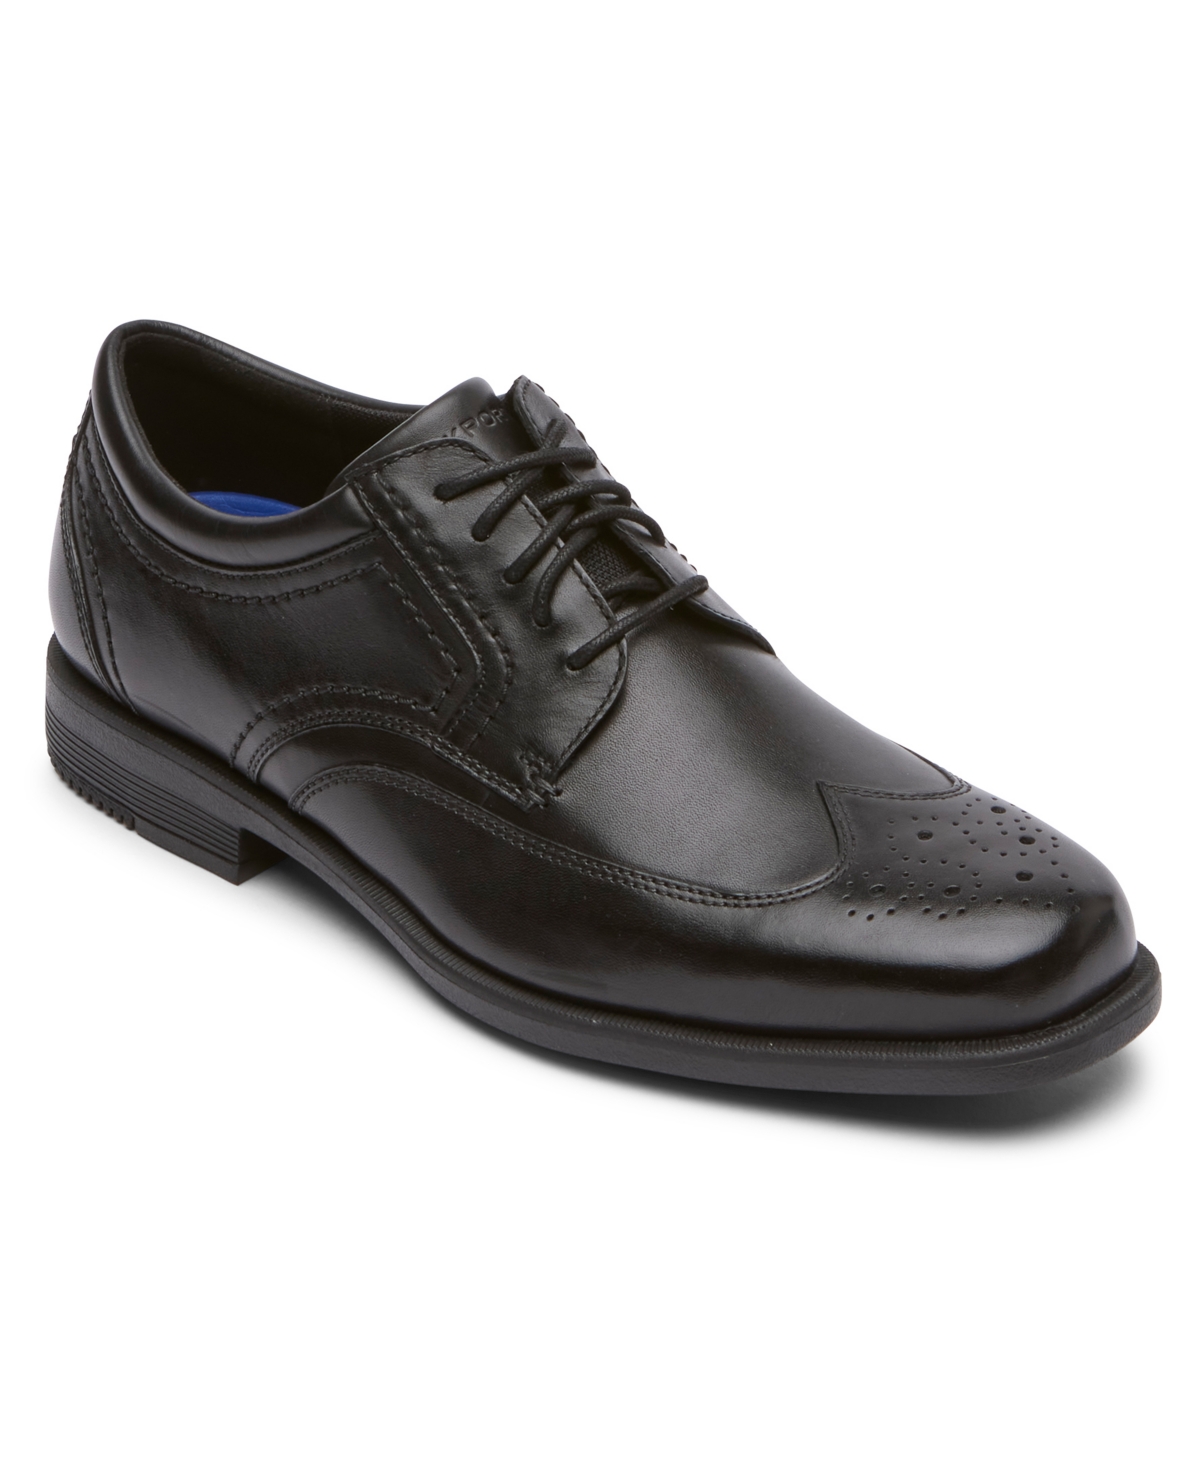 Men's Isaac Wingtip Shoes - Black